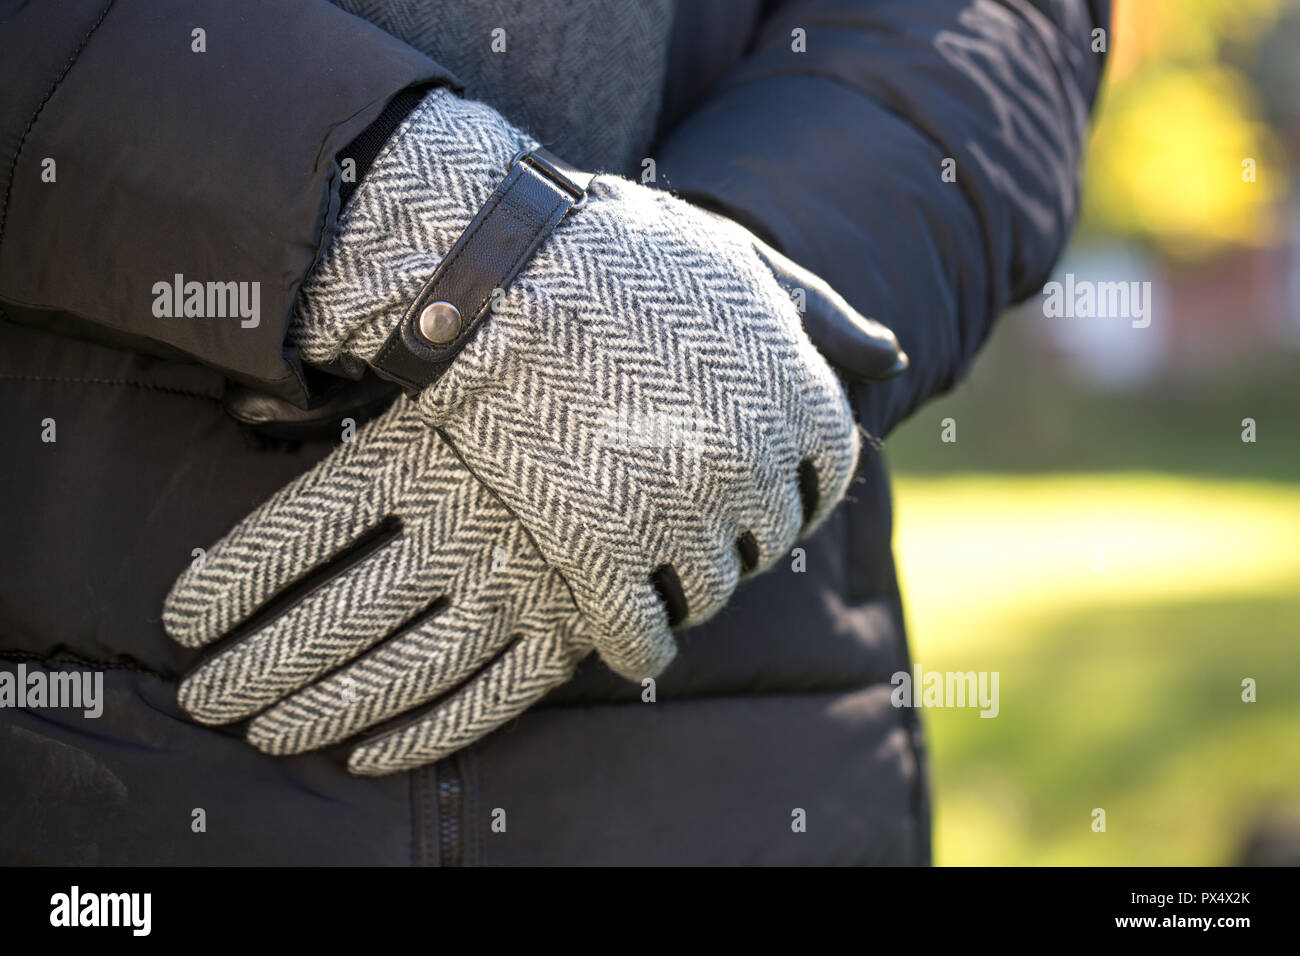 Pelle uomo guanti Foto stock - Alamy